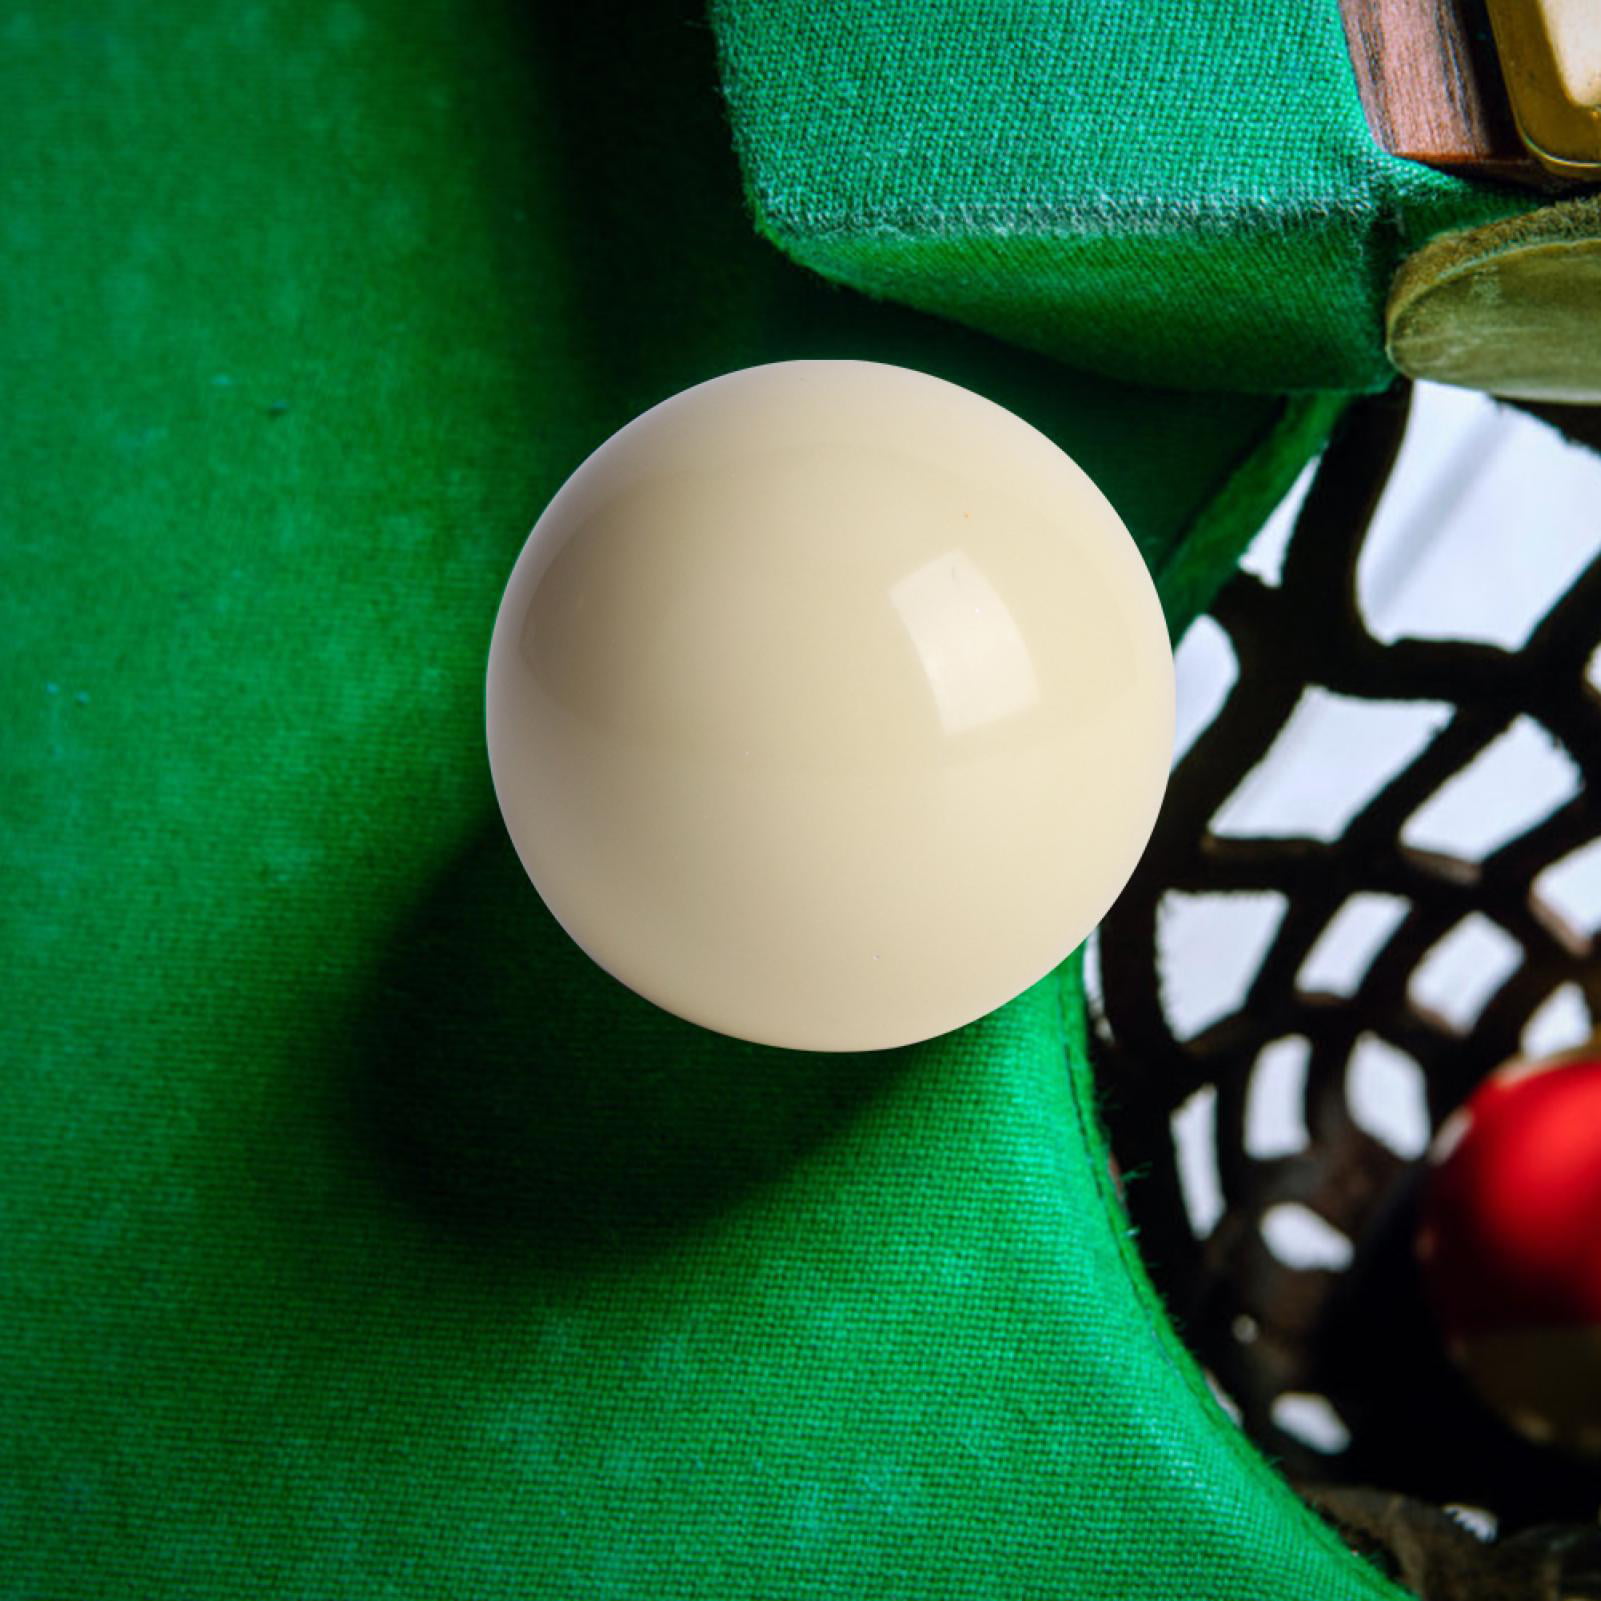 15pcs Pool Table Spots Self Adhesive 35mm Diameter Billiards Snooker Ball Point Sitcker Billiards Accessories 